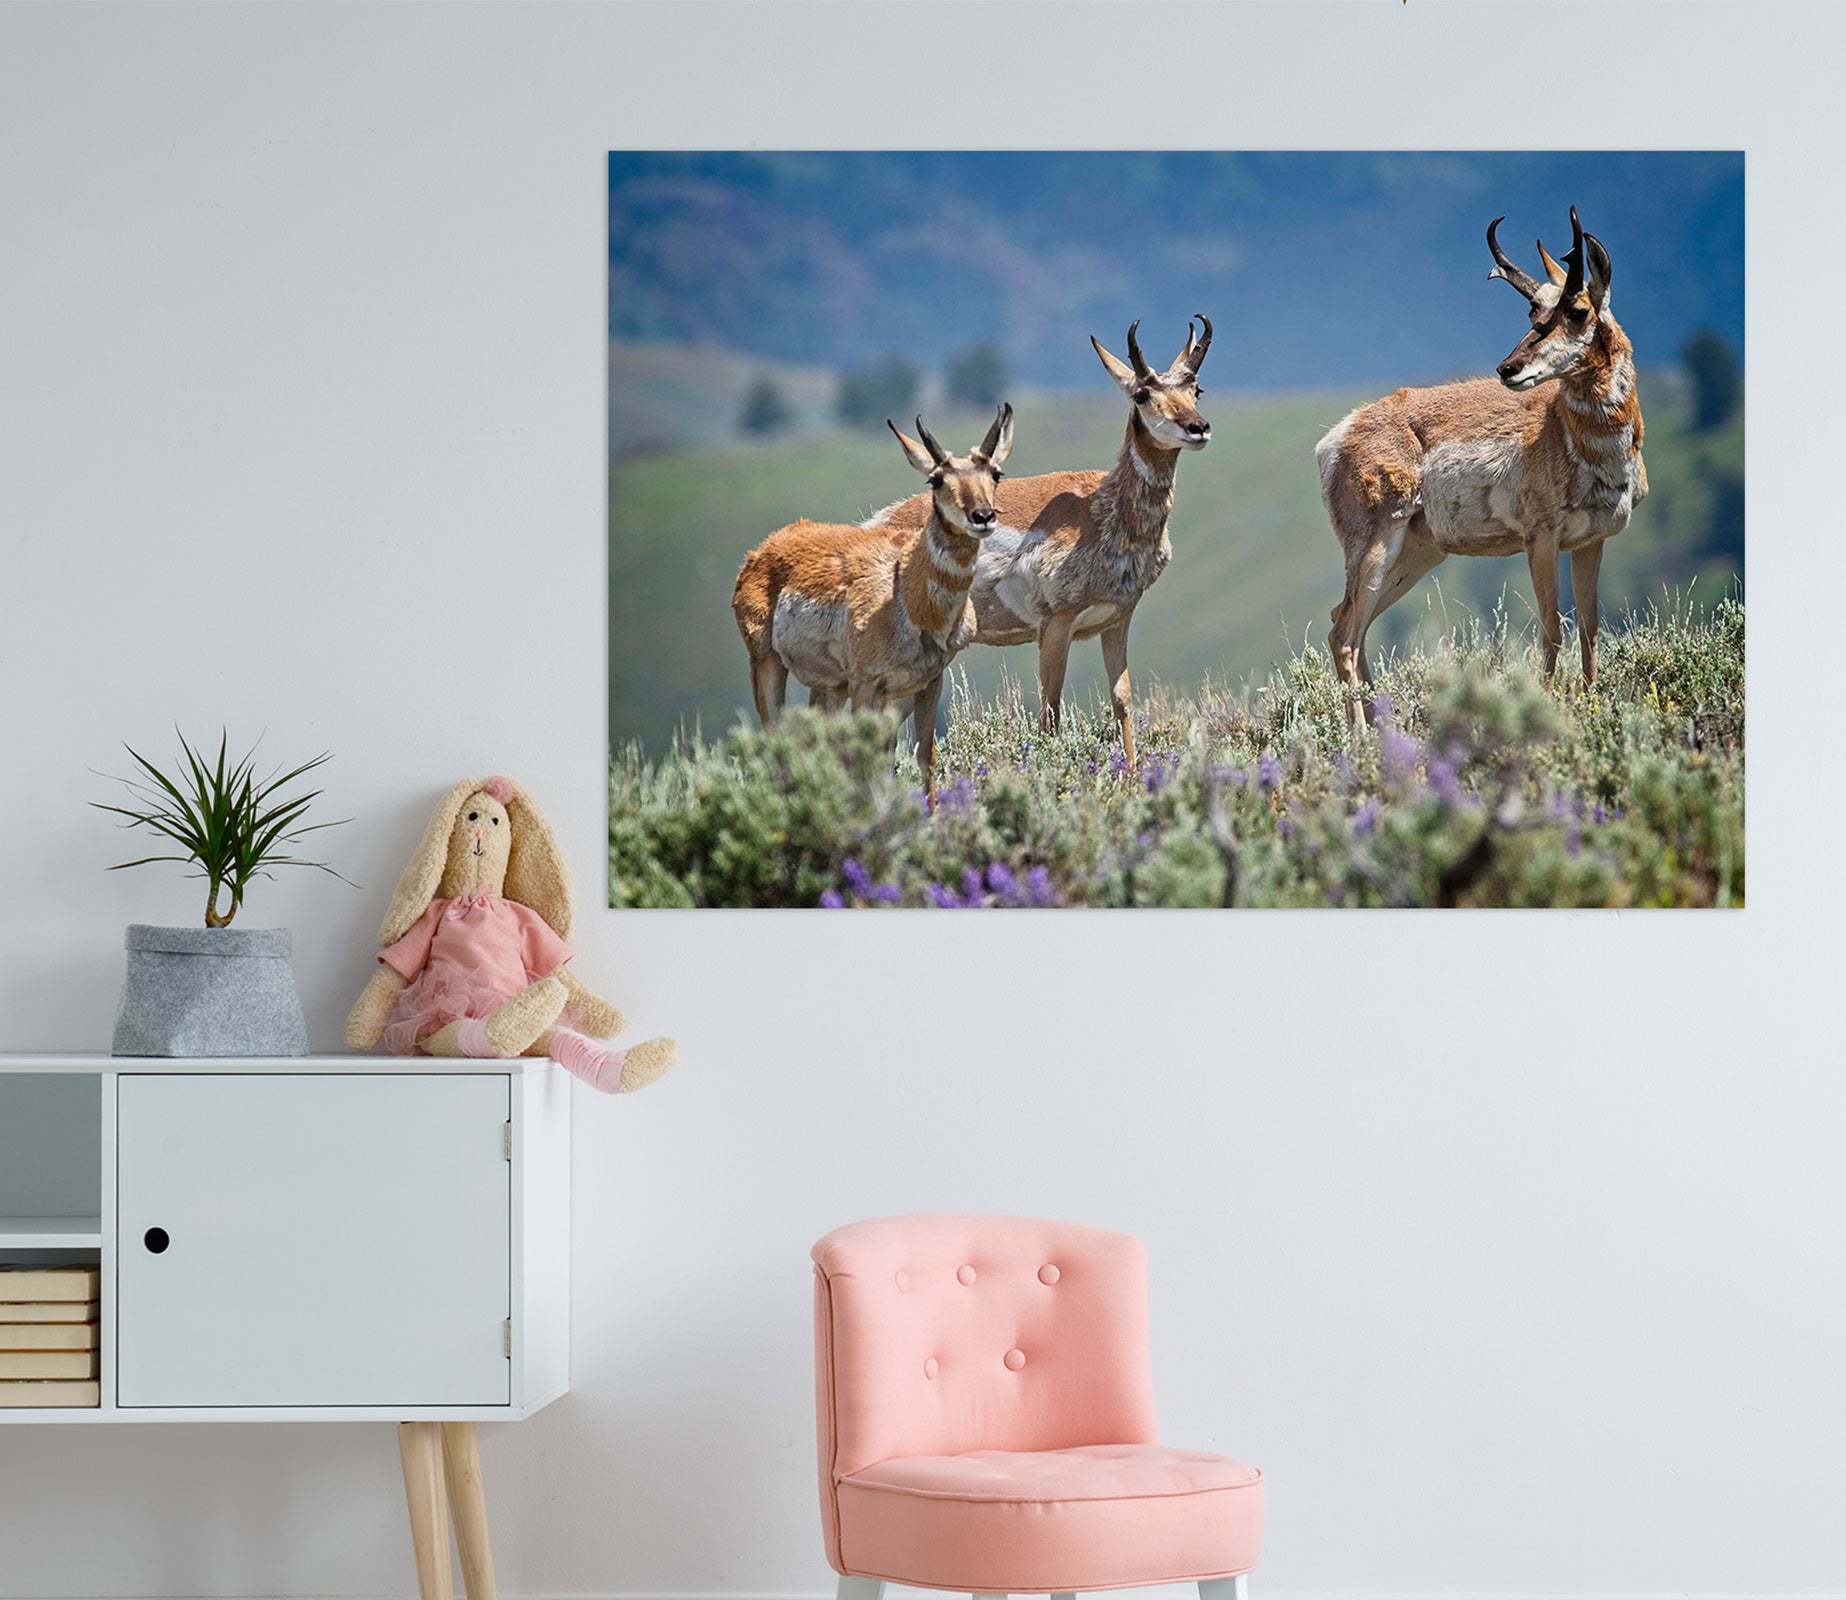 3D Pronghorn Antelope 002 Kathy Barefield Wall Sticker